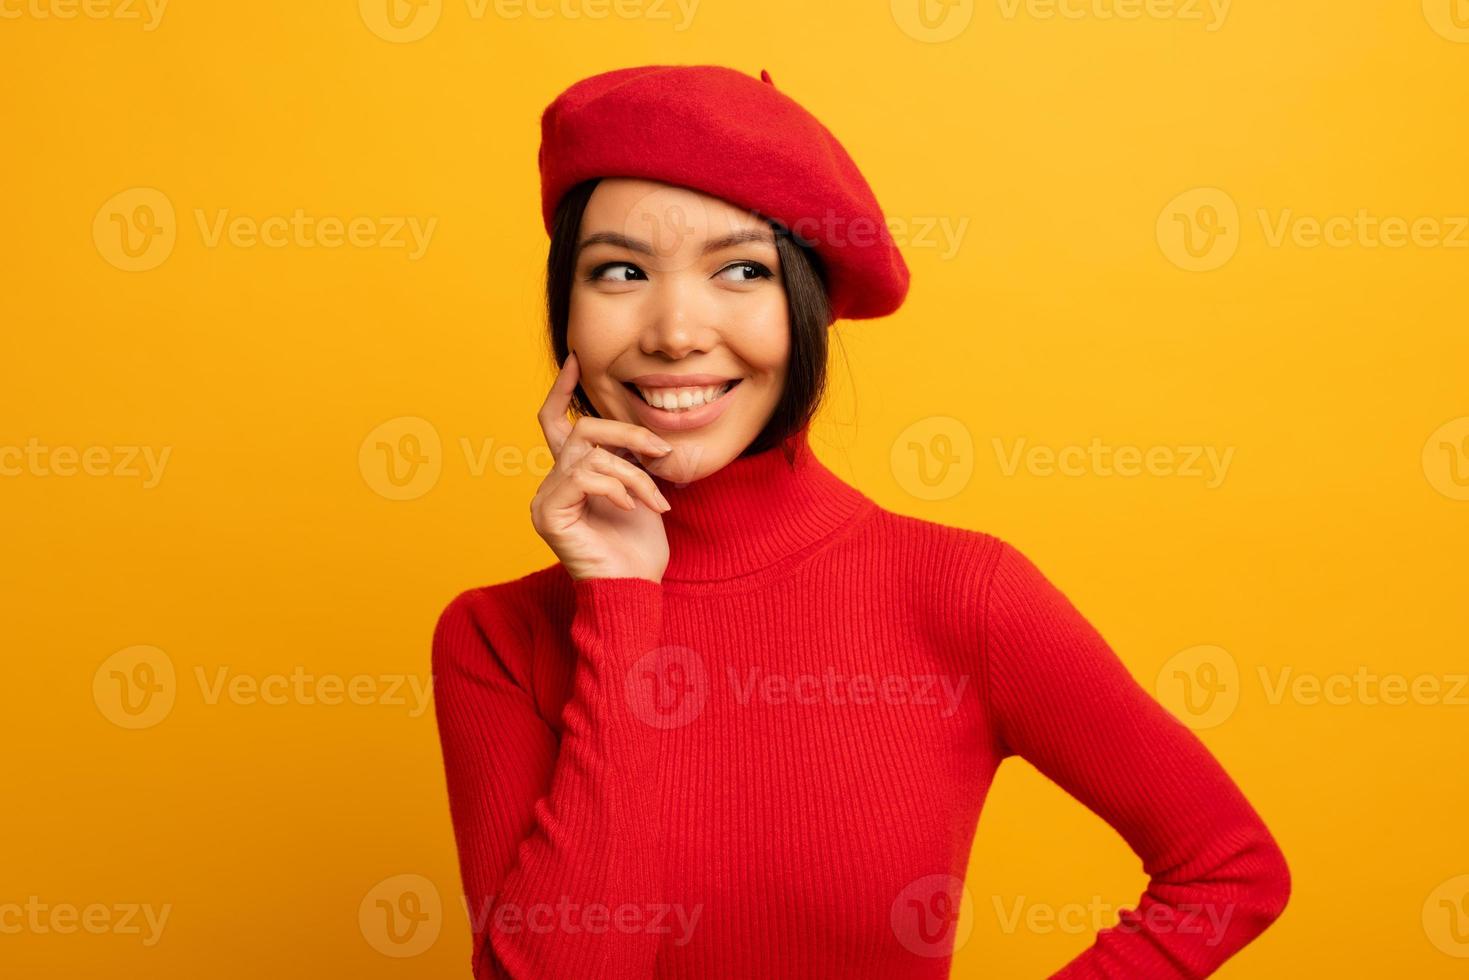 brunette meisje glimlacht met rood hoed en vest. emotioneel en blij uitdrukking. geel achtergrond foto